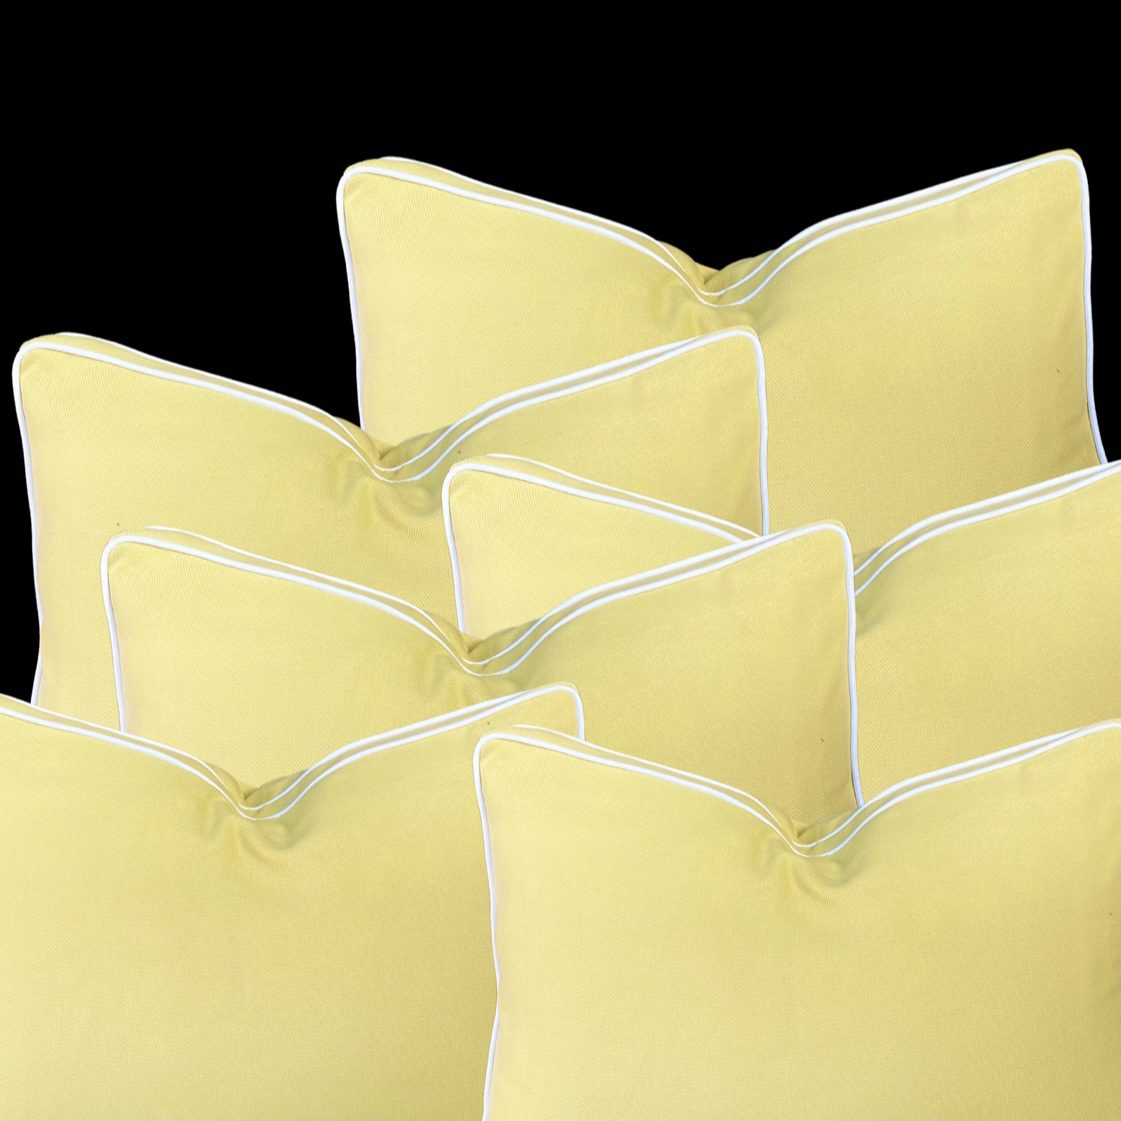 Sunshine Yellow outdoor Upholstery Fabric.